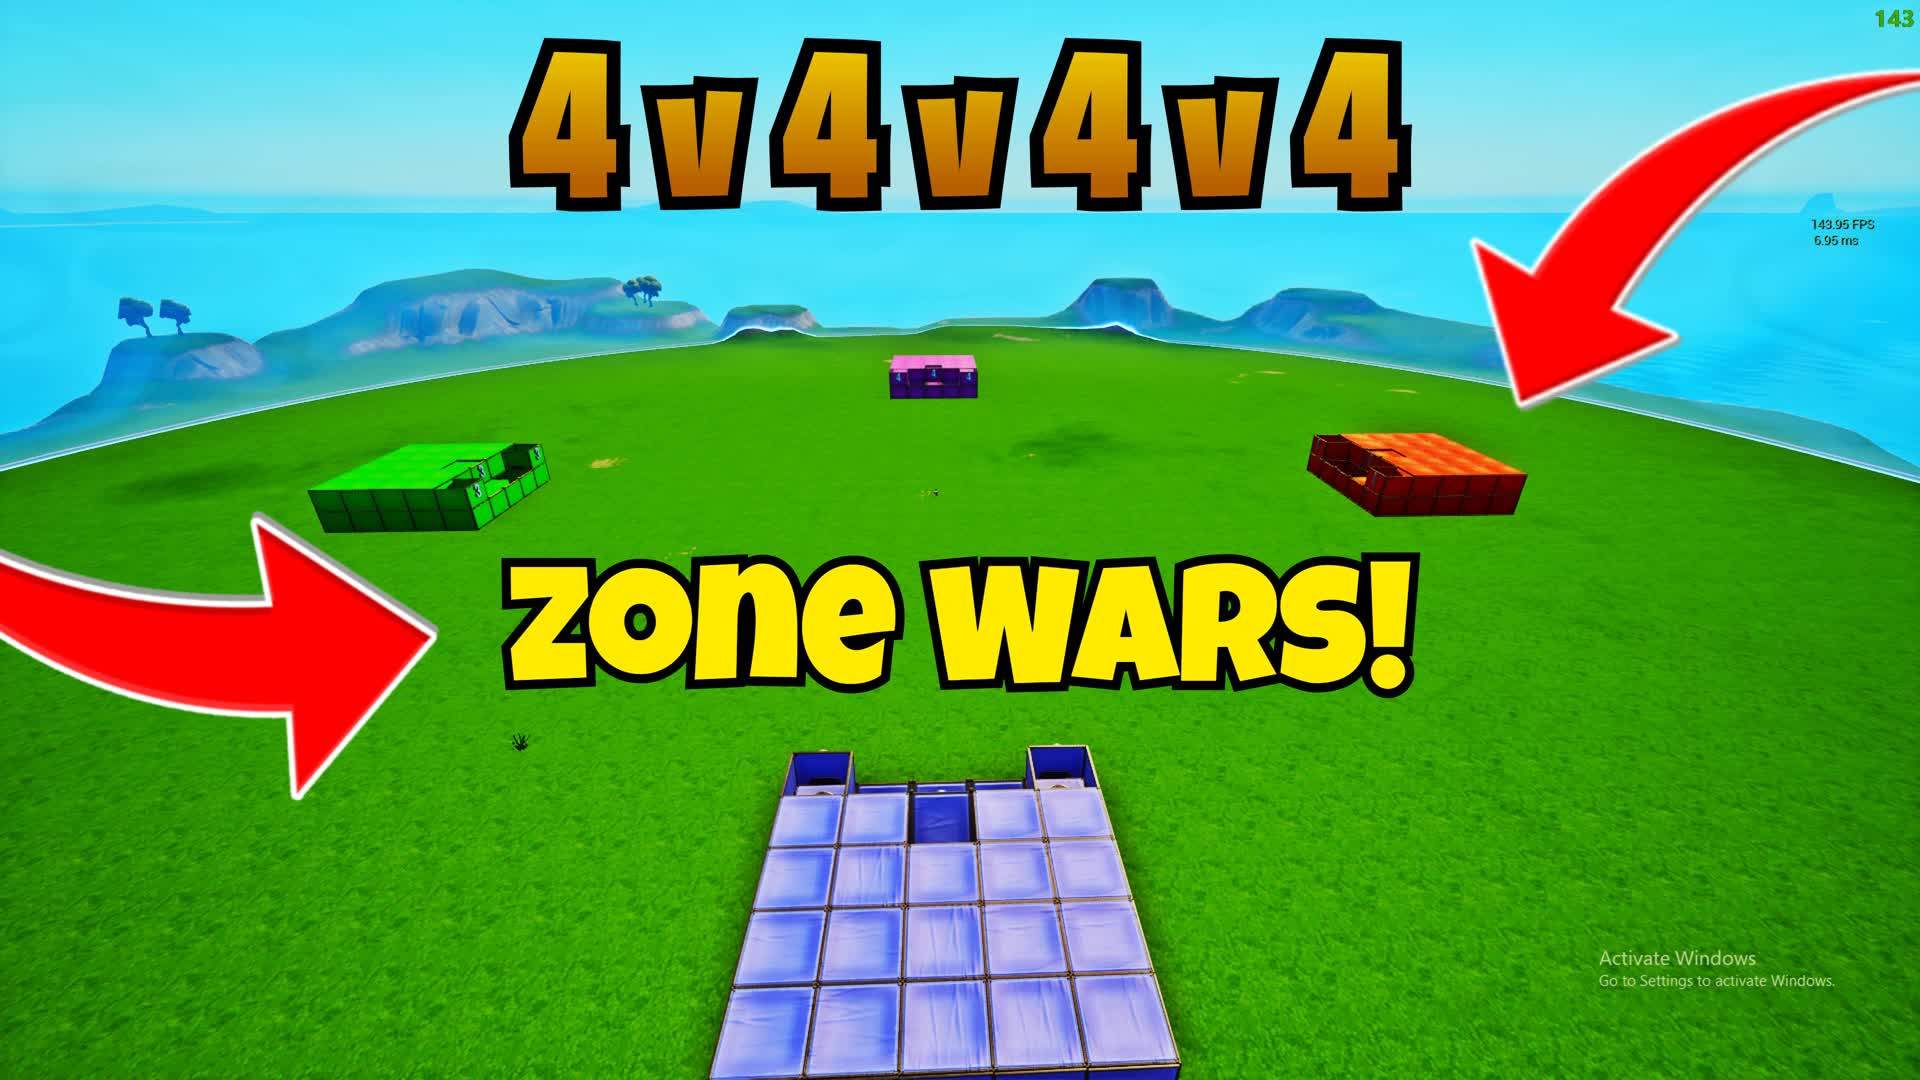 TOG's 4V4V4V4 Zone Wars!